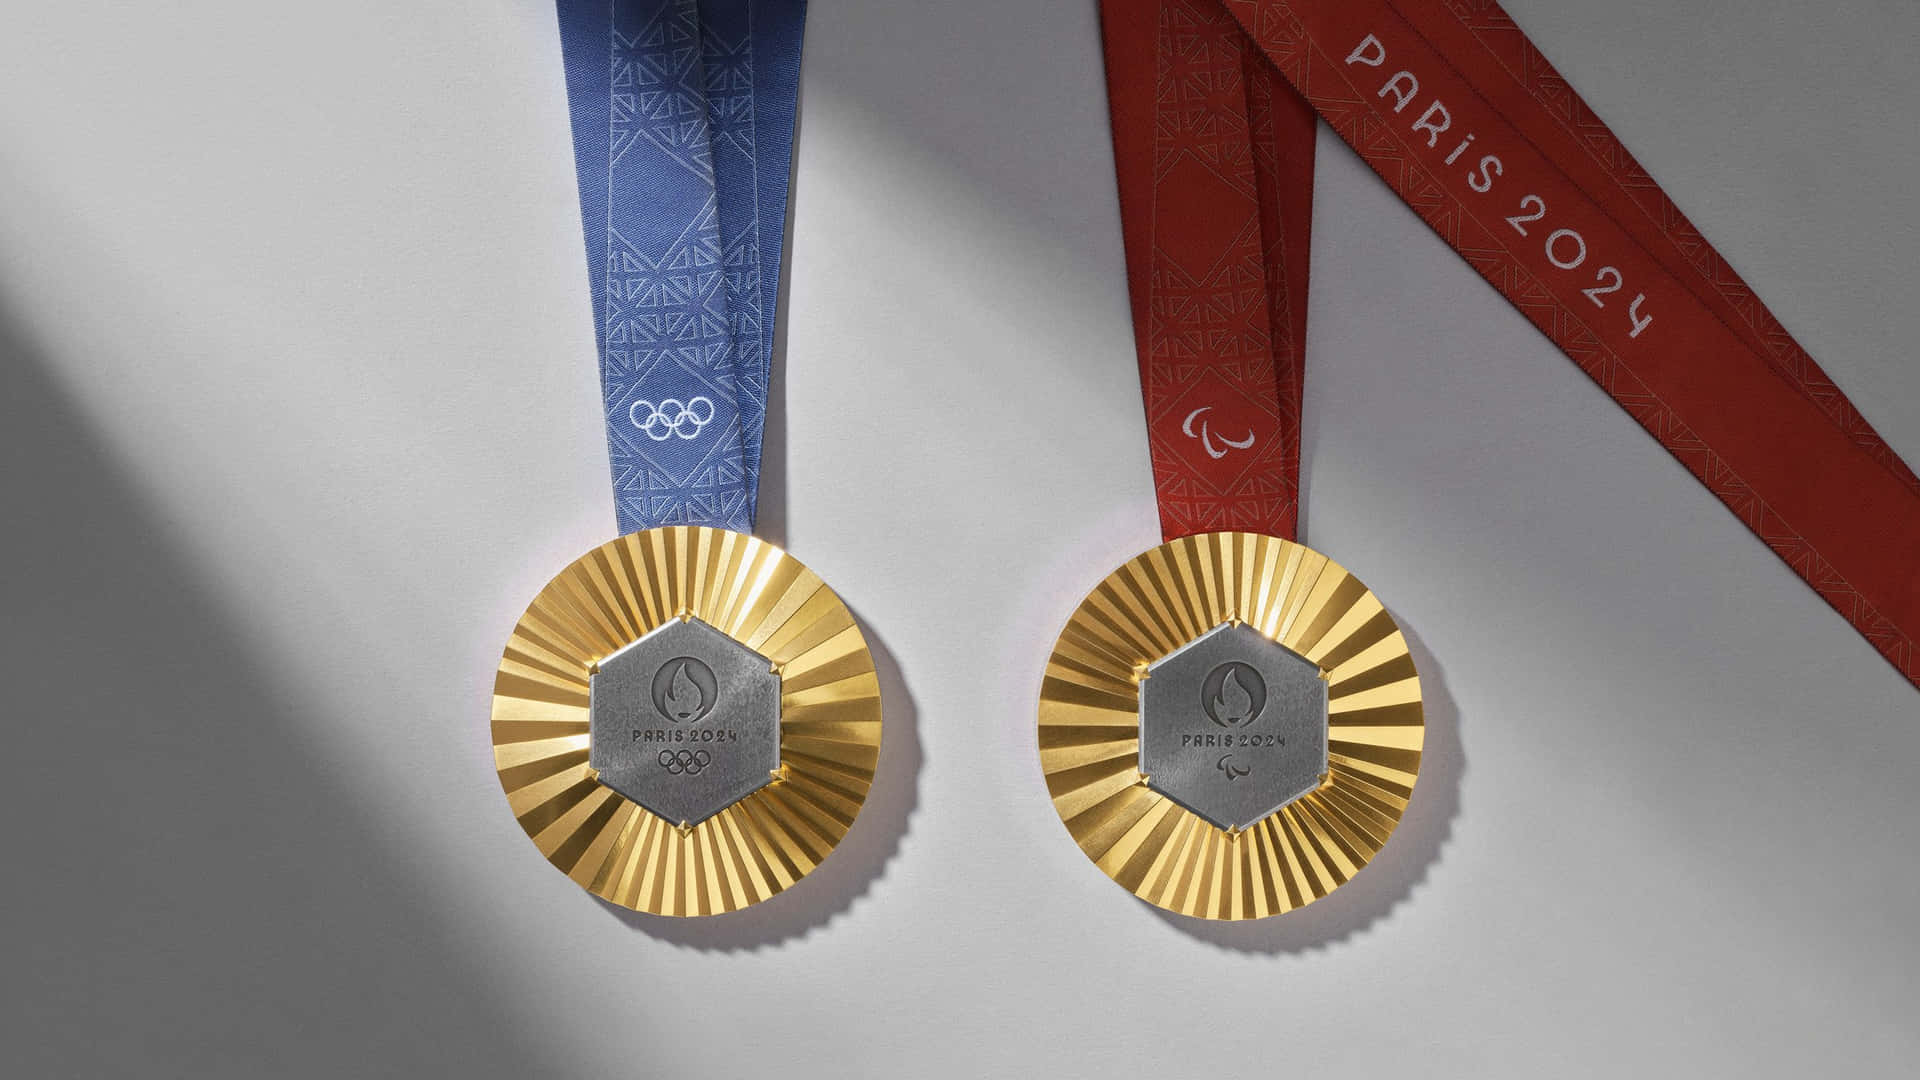 Paris2024 Olympic Medals Wallpaper